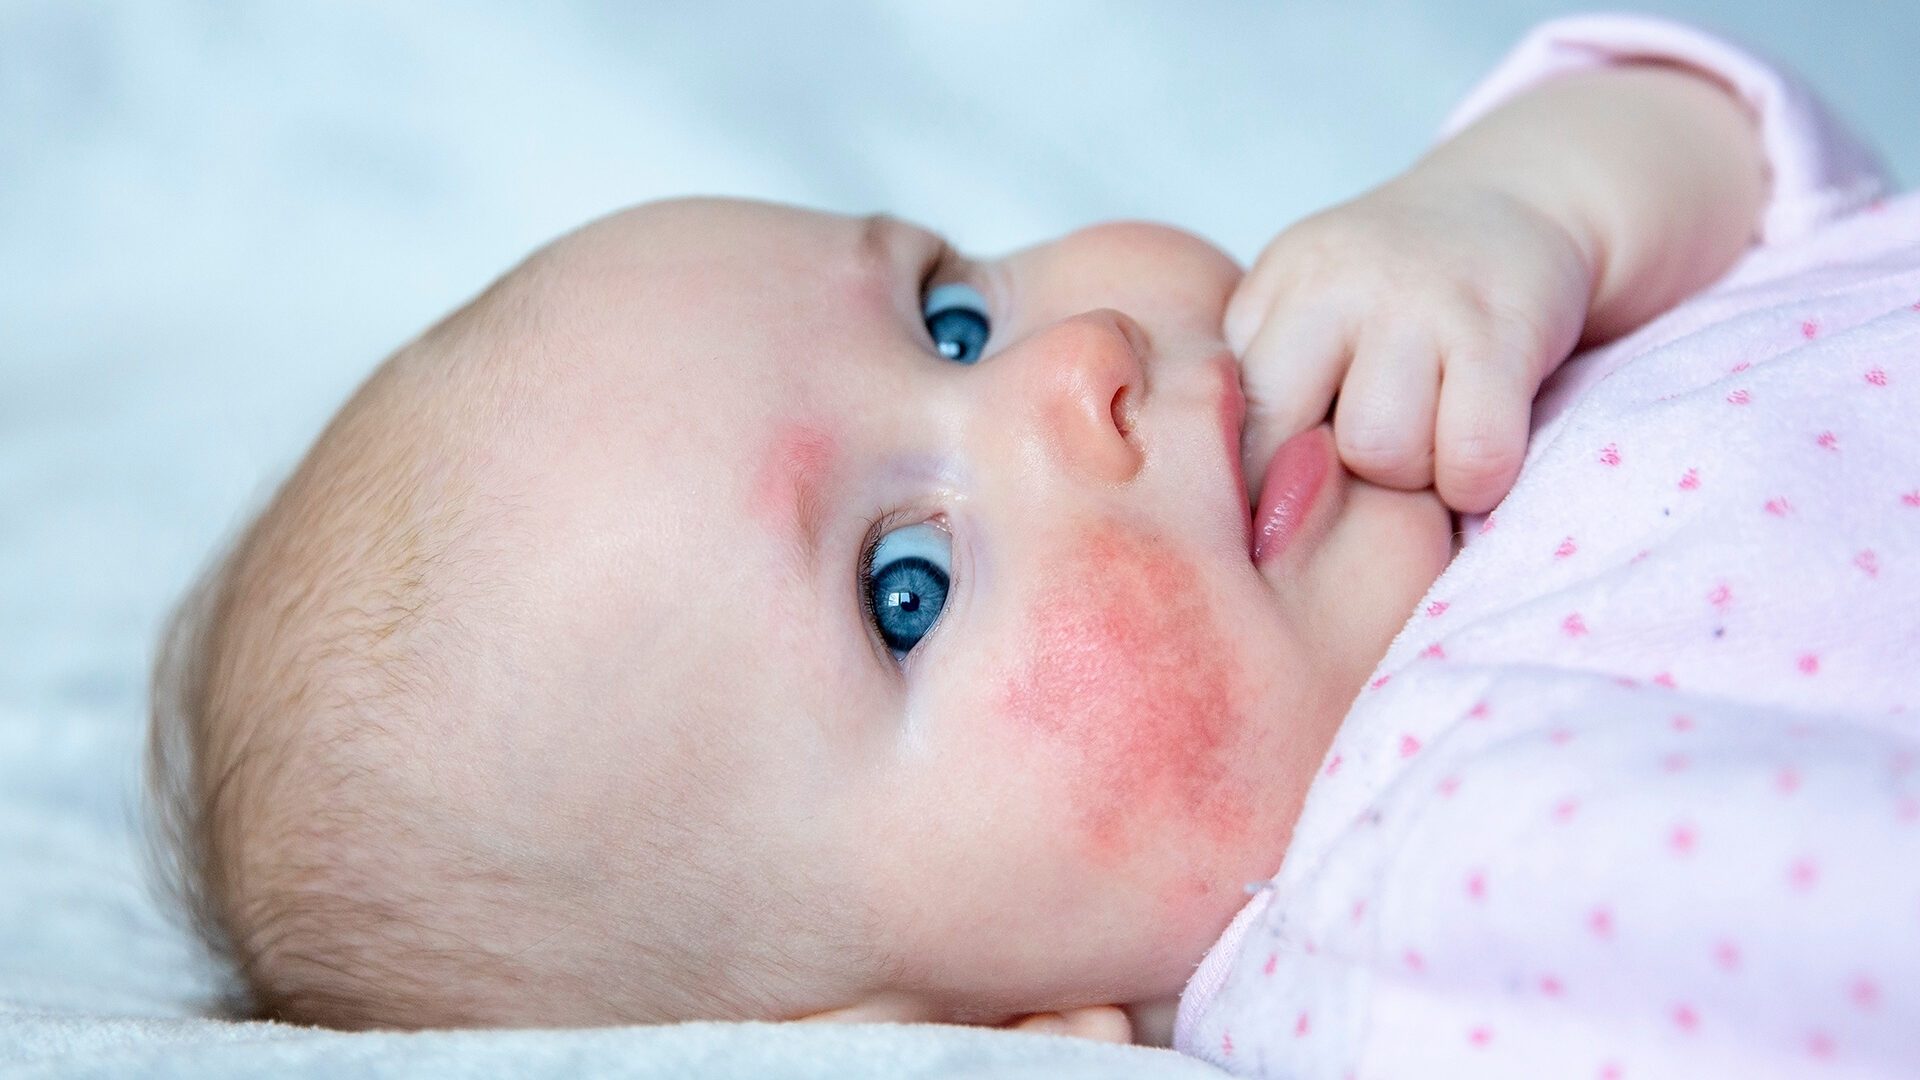 Newborn baby with allergic reaction on skin. Skin rush, detoxify.